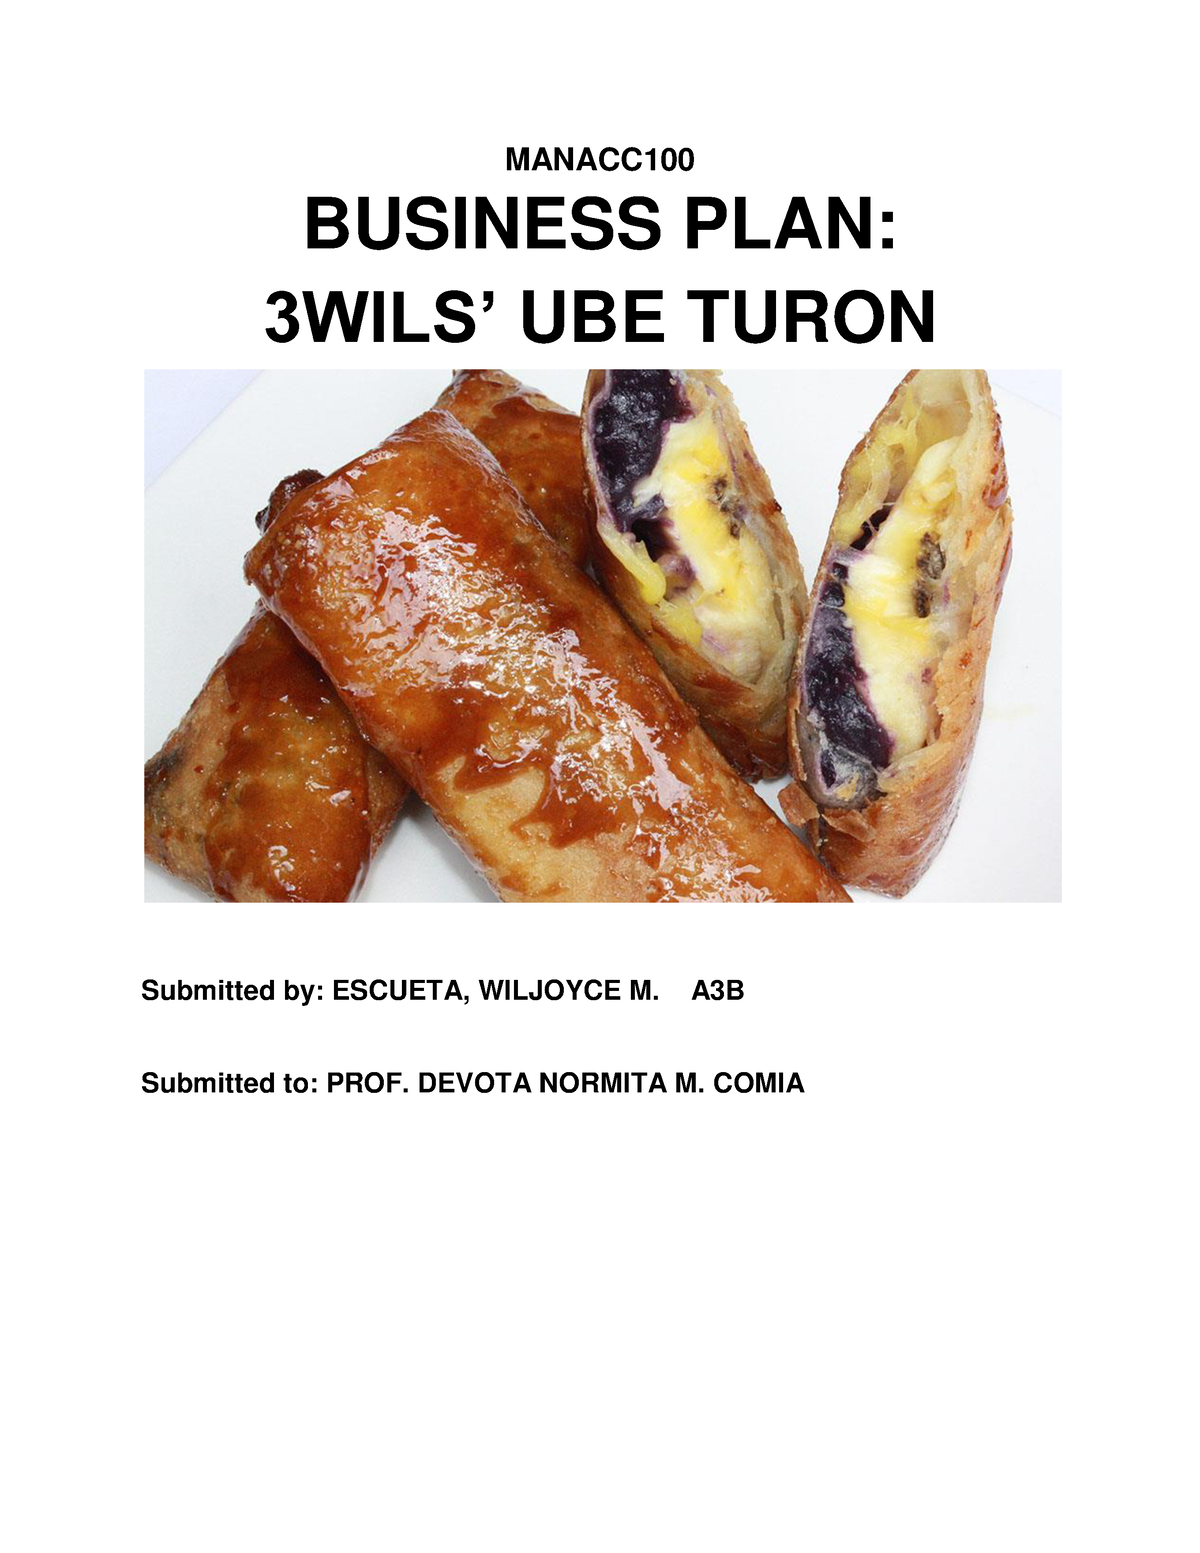 ube jam business plan pdf